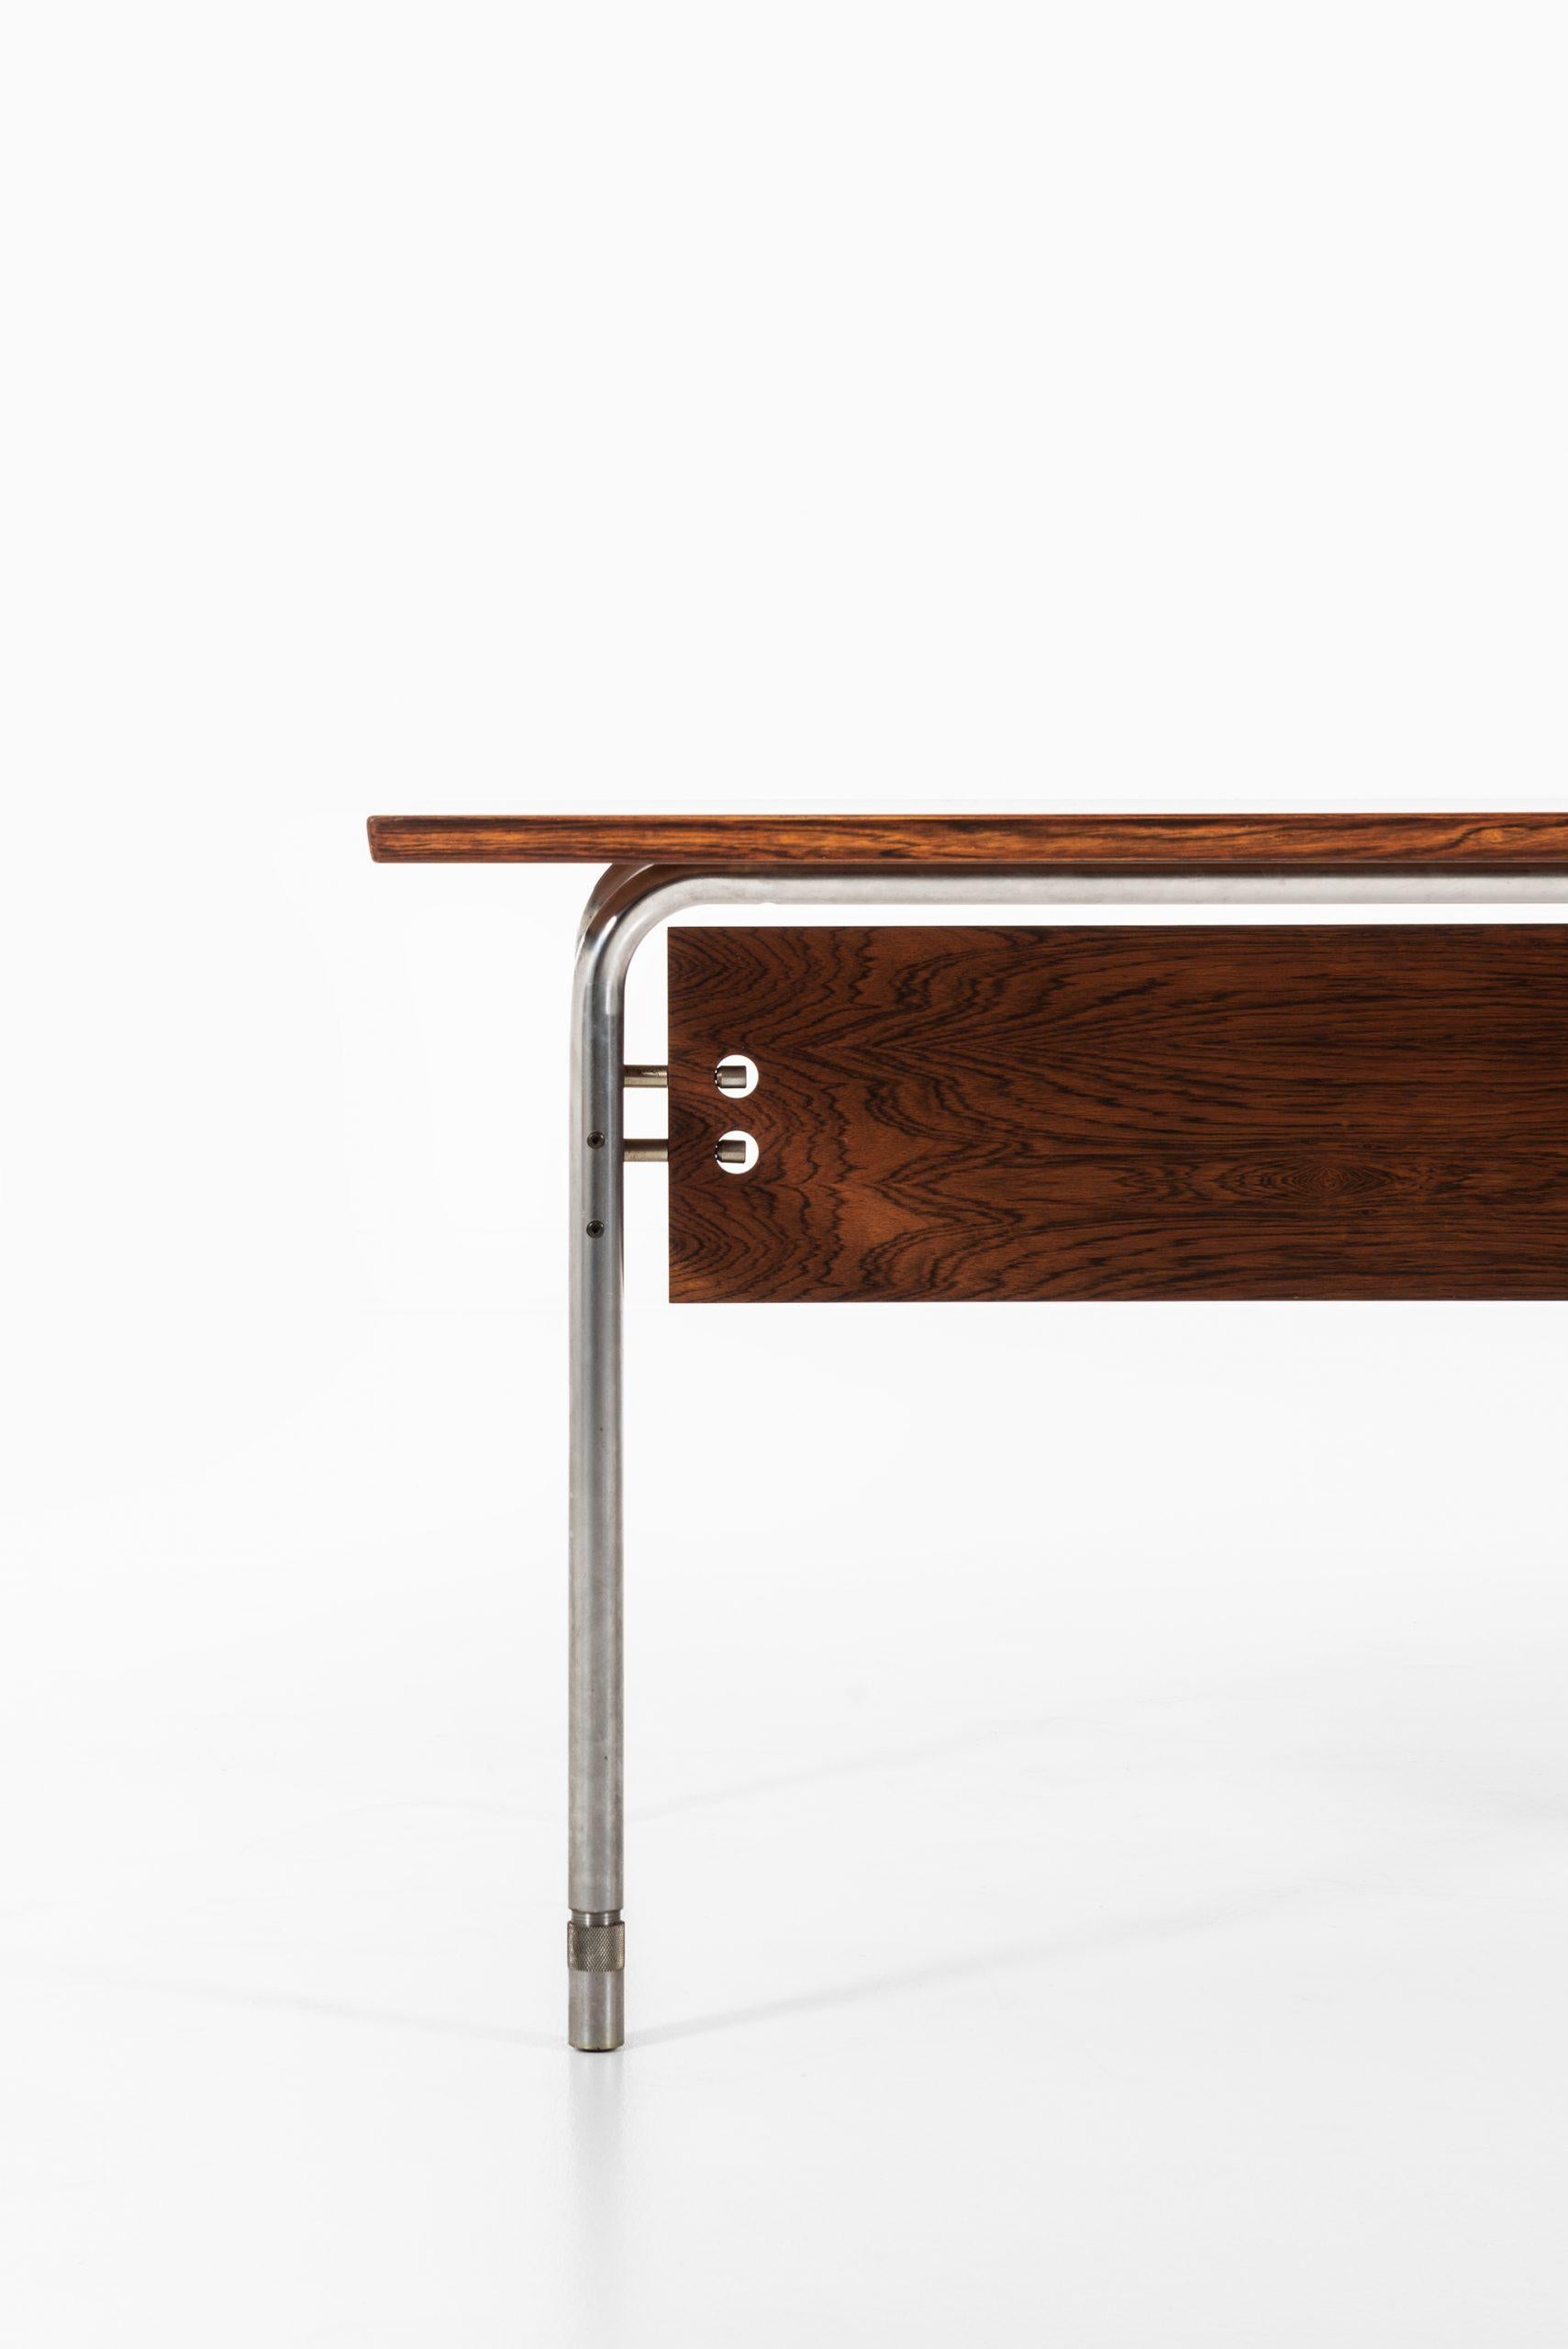 Mid-20th Century Arne Vodder Desk Produced by Sibast Møbelfabrik in Denmark For Sale